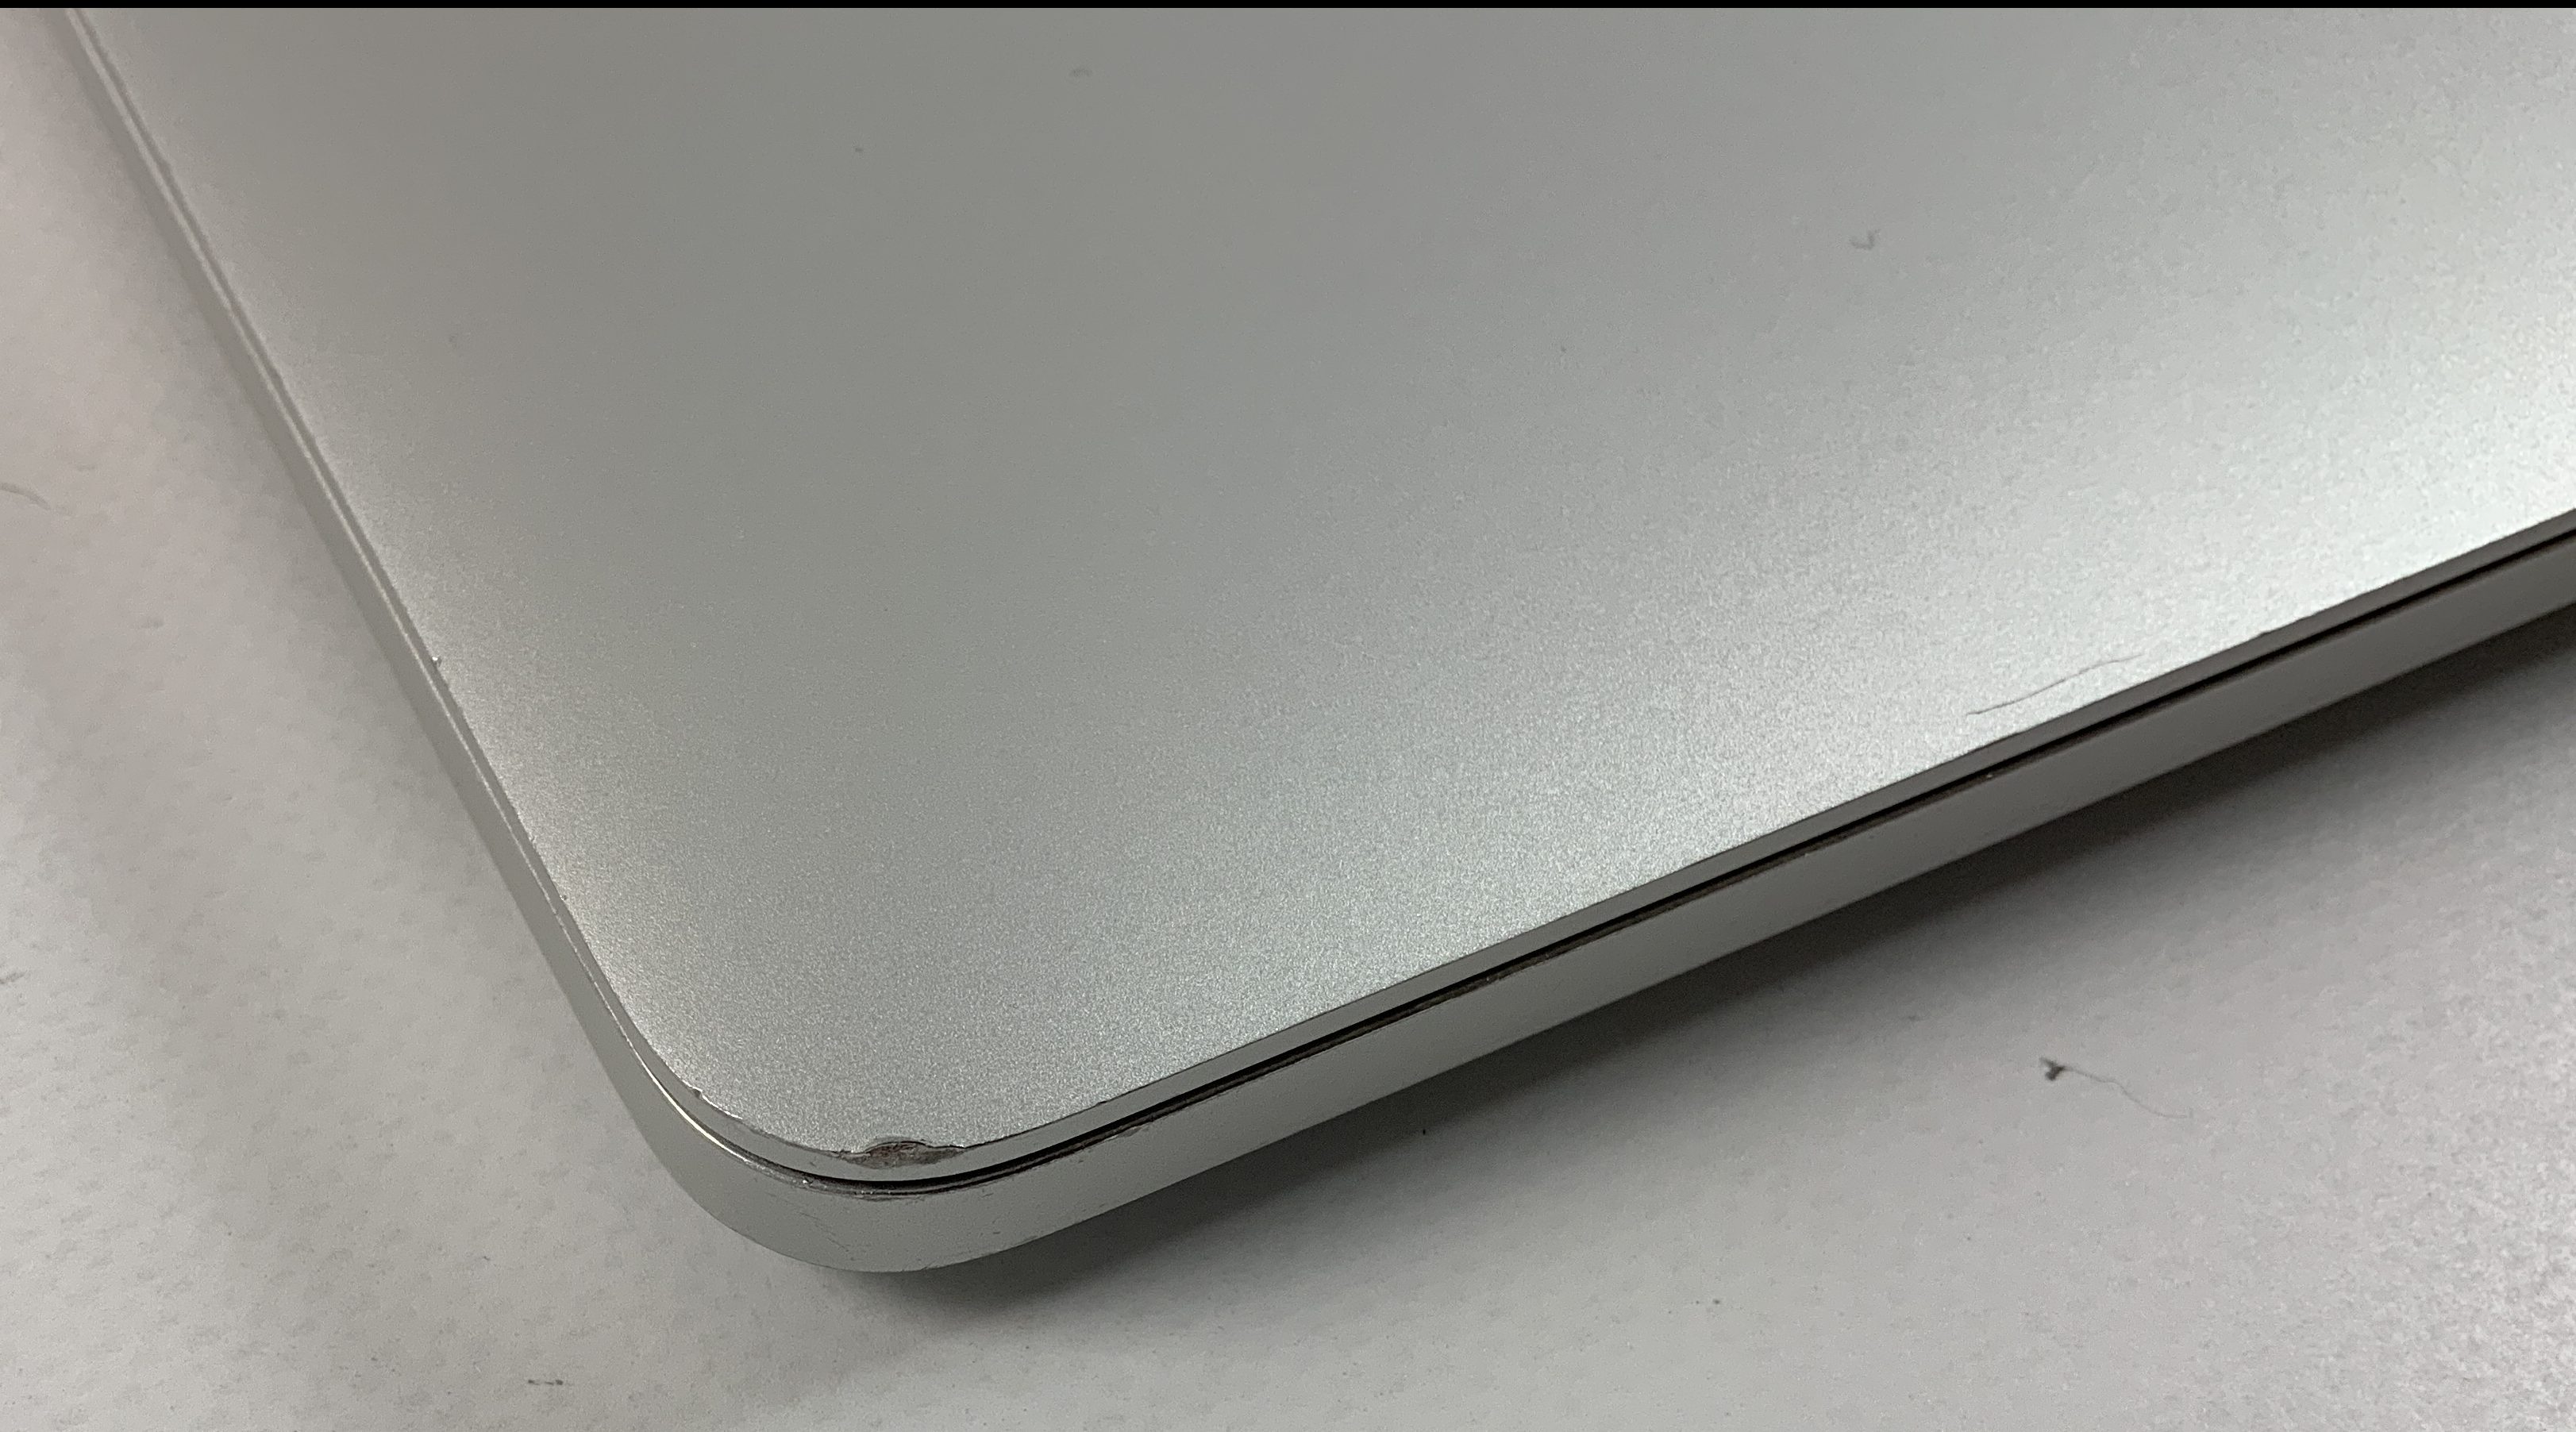 MacBook Pro 13" 4TBT Late 2016 (Intel Core i5 2.9 GHz 16 GB RAM 256 GB SSD), Silver, Intel Core i5 2.9 GHz, 16 GB RAM, 256 GB SSD, immagine 5